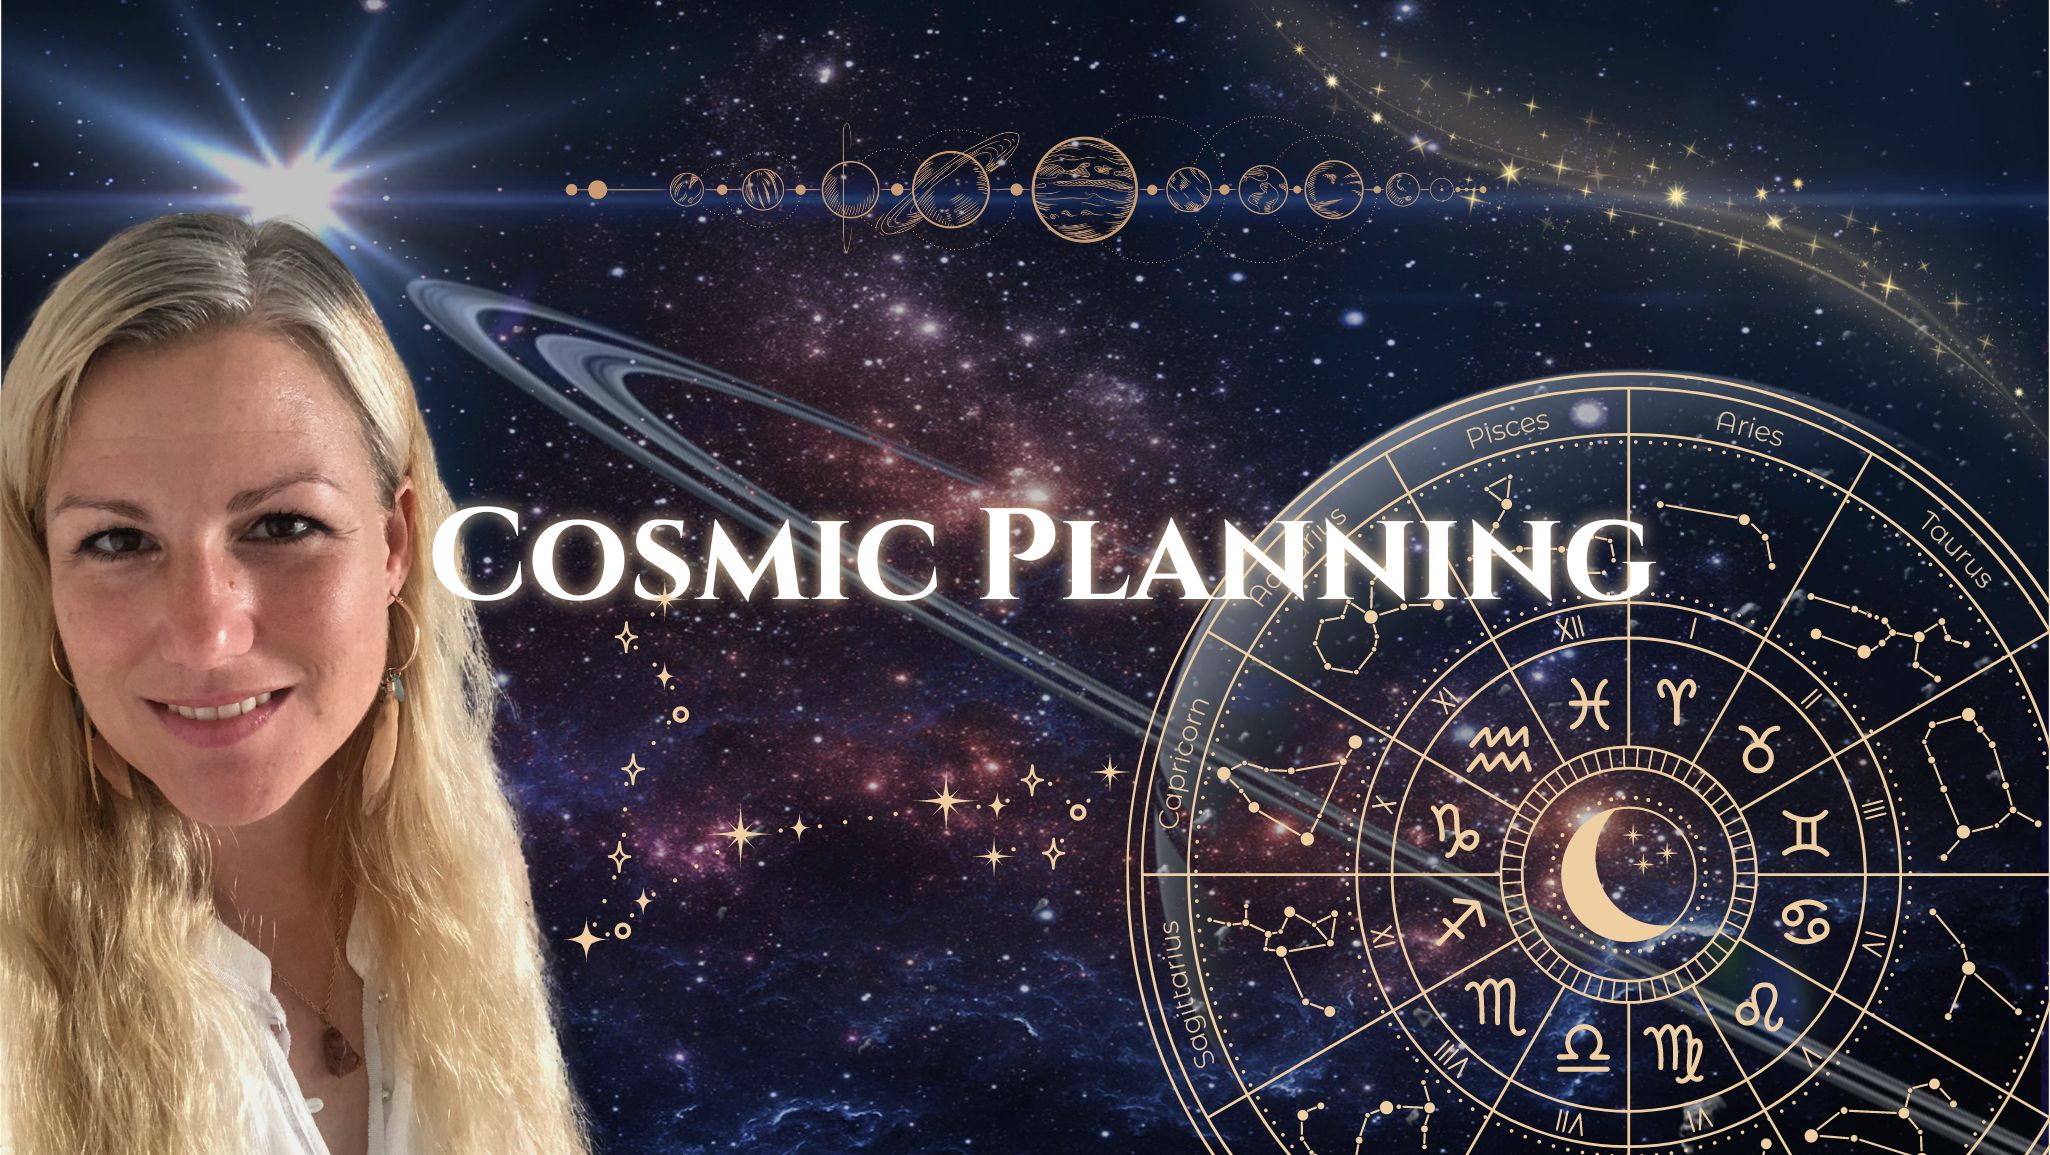 Melodie_Sachs_Spiritualite_Chamanisme_Mediumnite_PdV_Cosmic_Planning_2